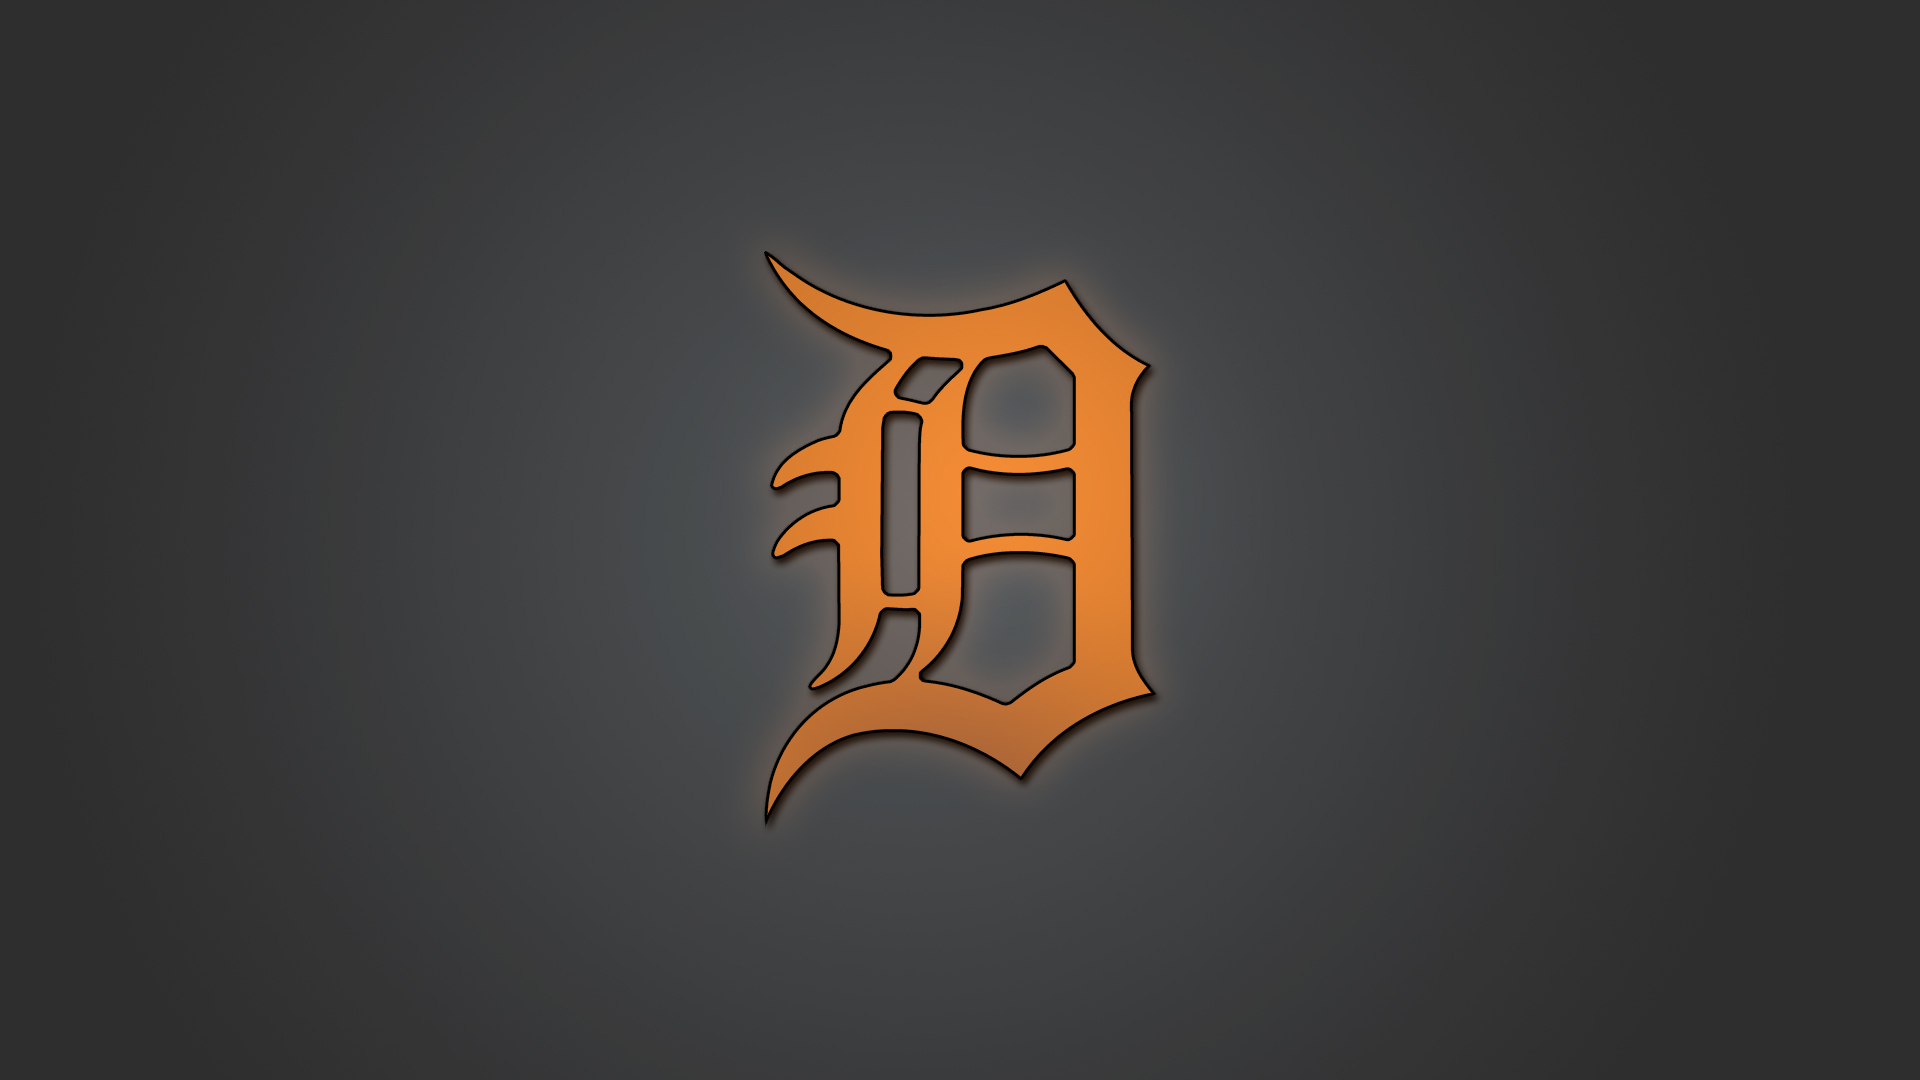 Detroit Wallpaper Tigers About Placing Series Baseball